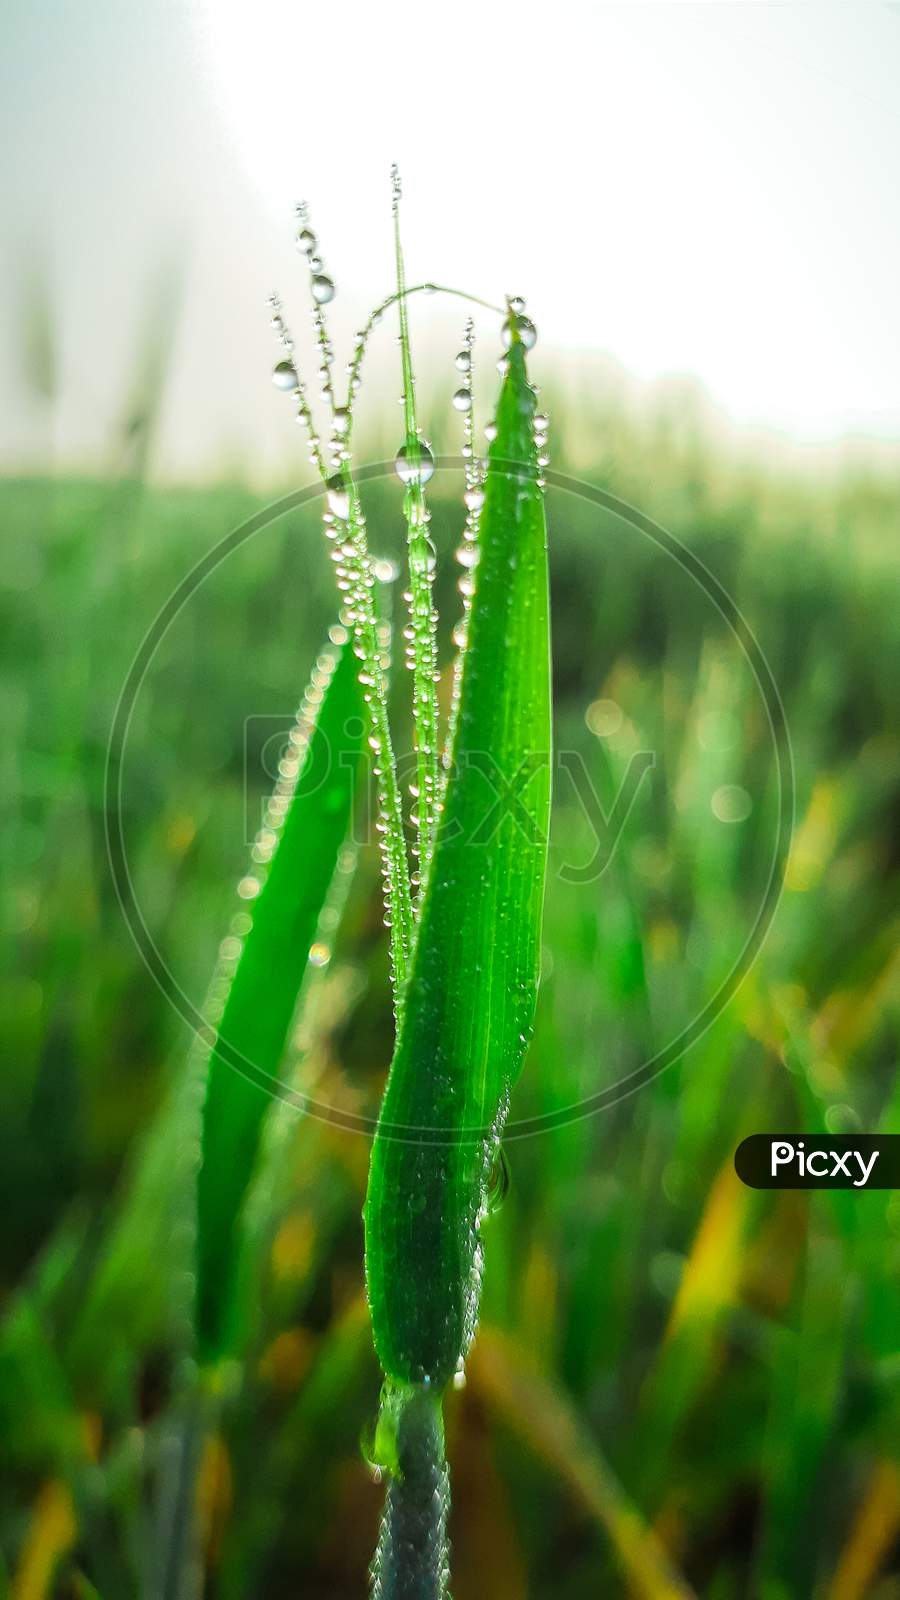 Grass is a monocotyledon plant.